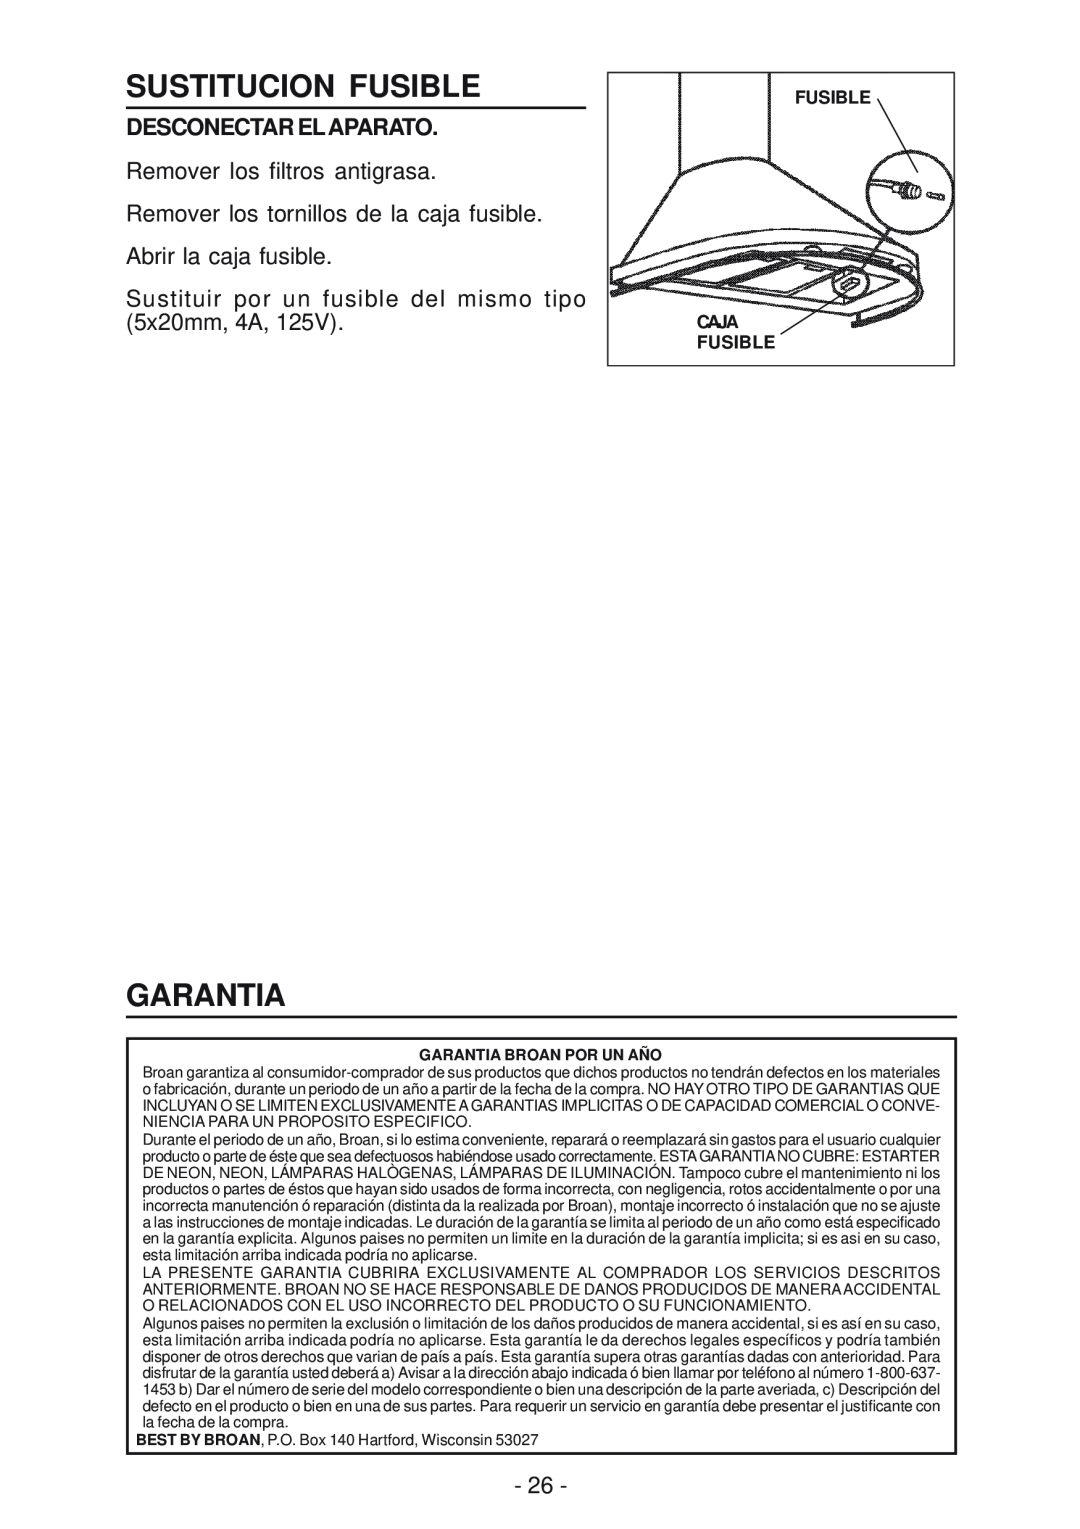 Best K15 manual Sustitucion Fusible, Garantia, Desconectar Elaparato, Fusible Caja Fusible 